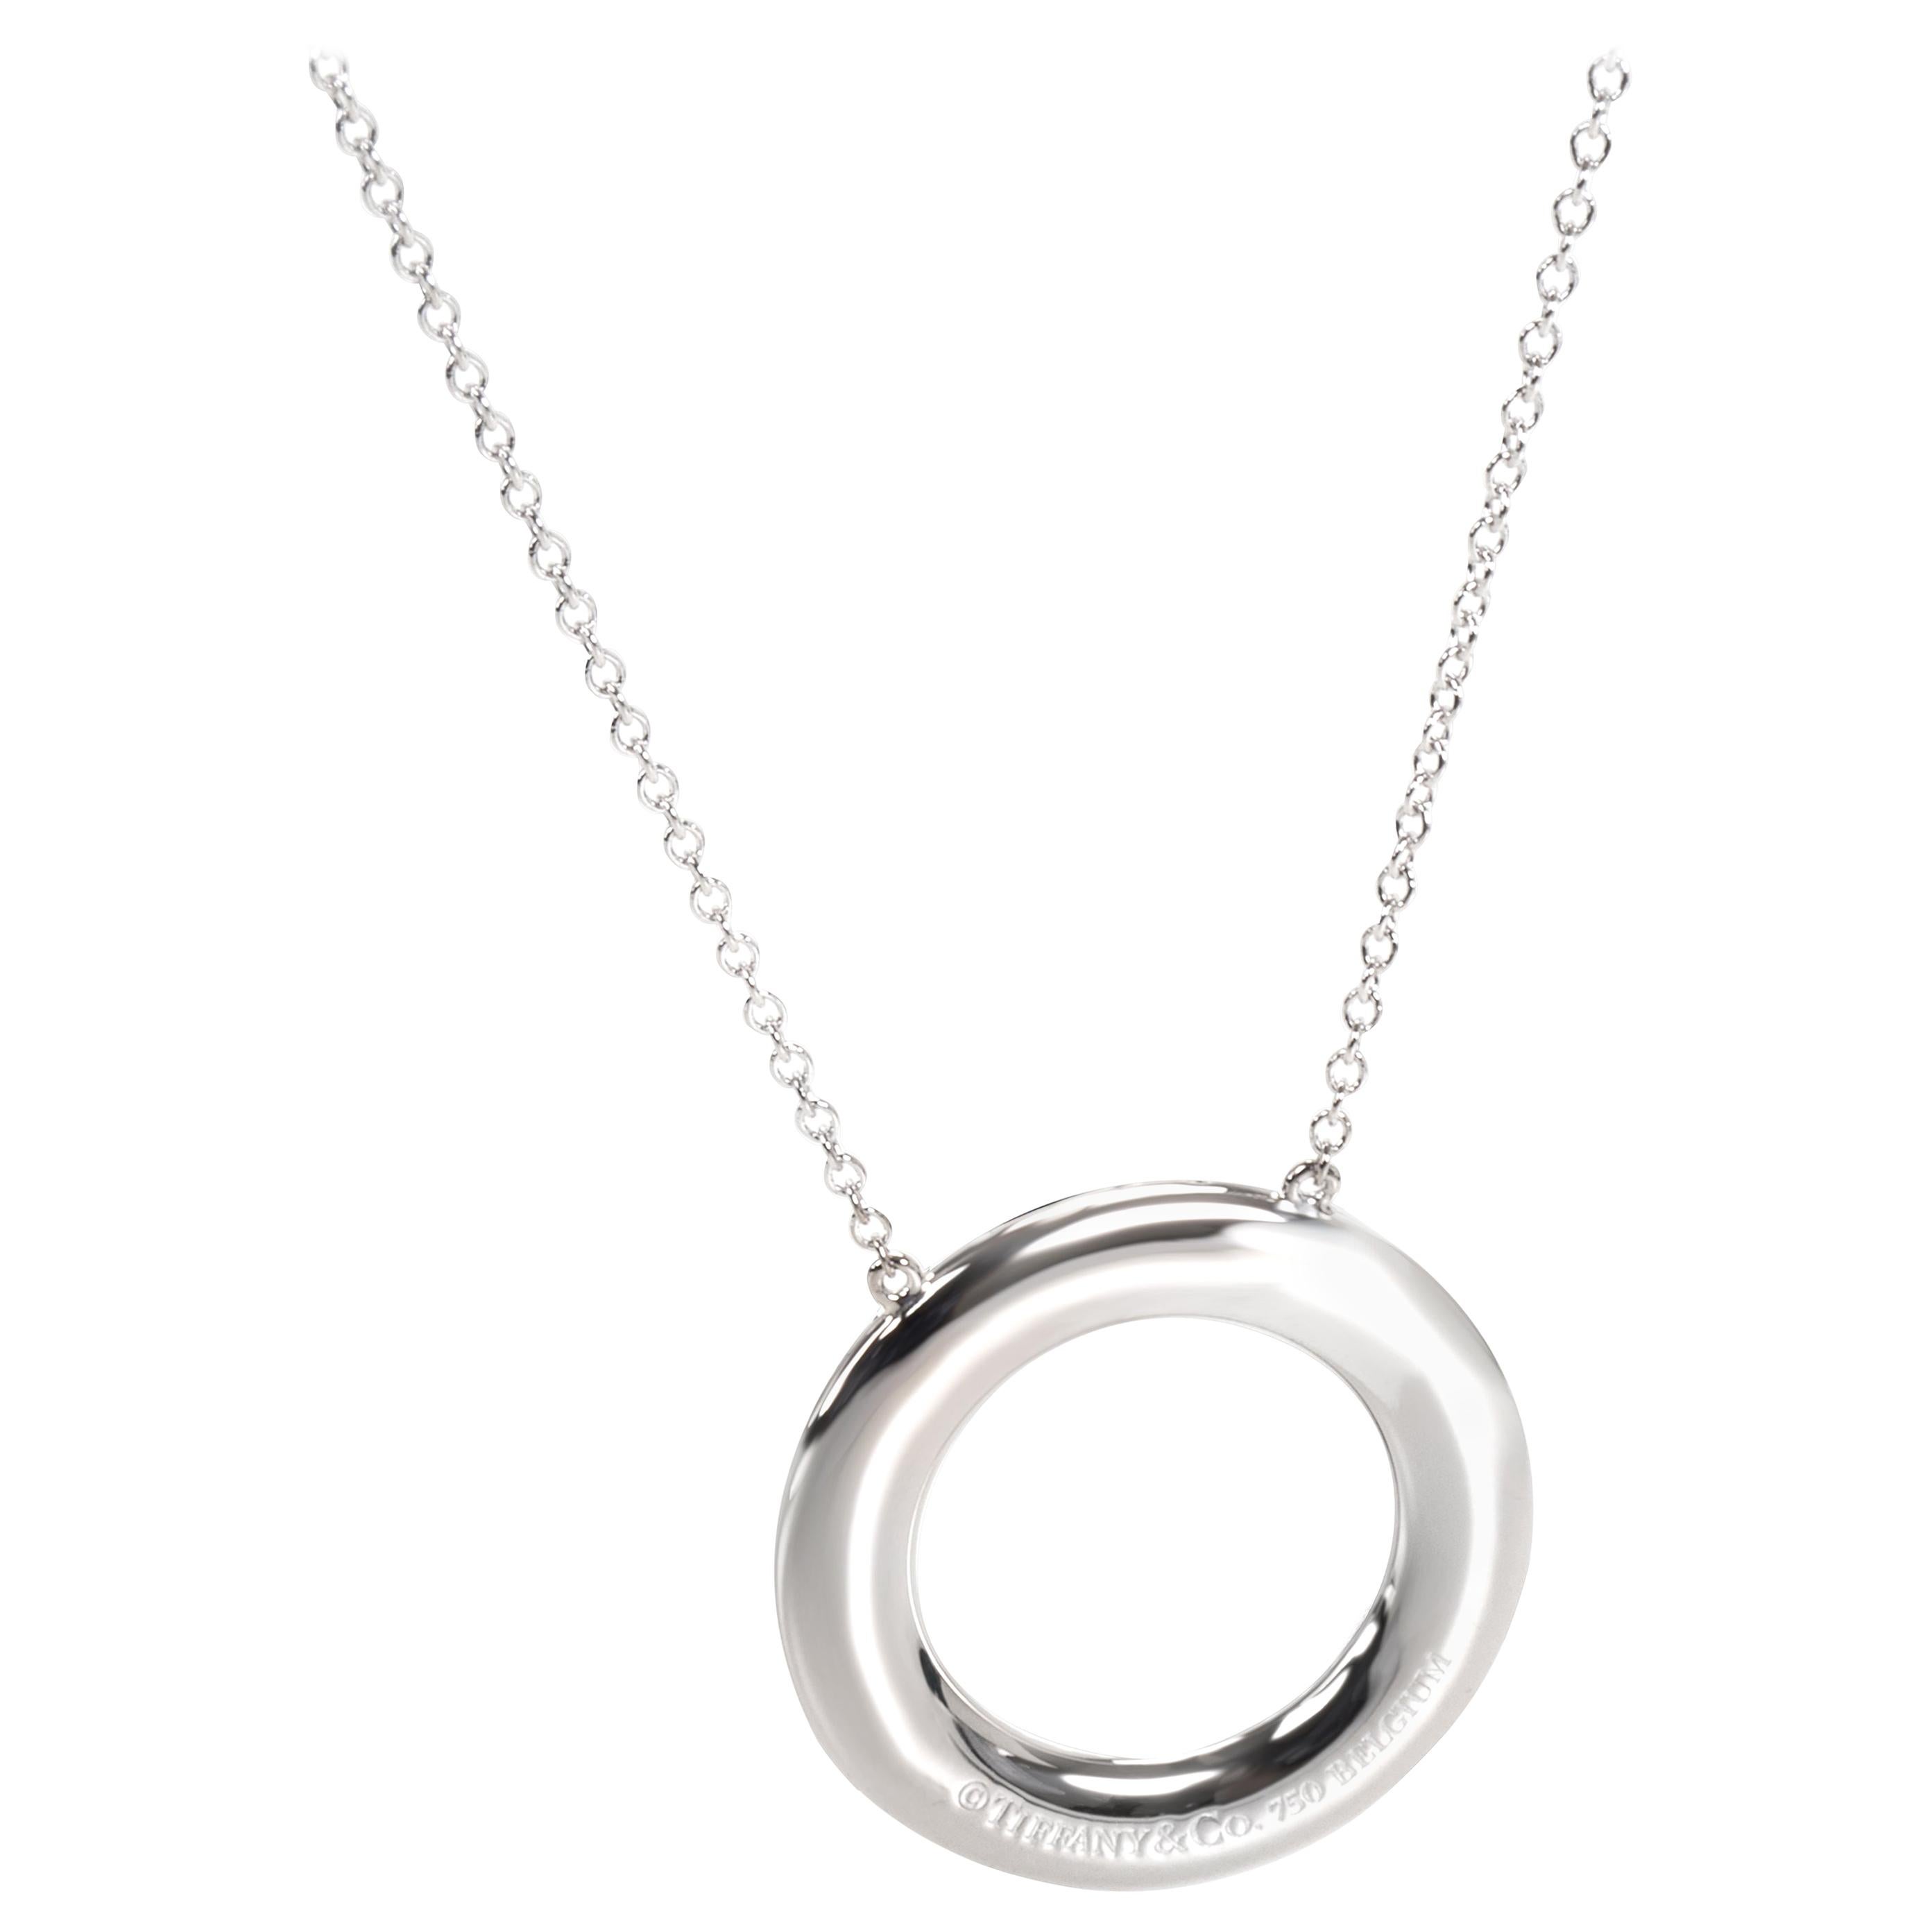 Tiffany & Co. Three-Row Circle Necklace in 18 Karat White Gold 0.70 Carat